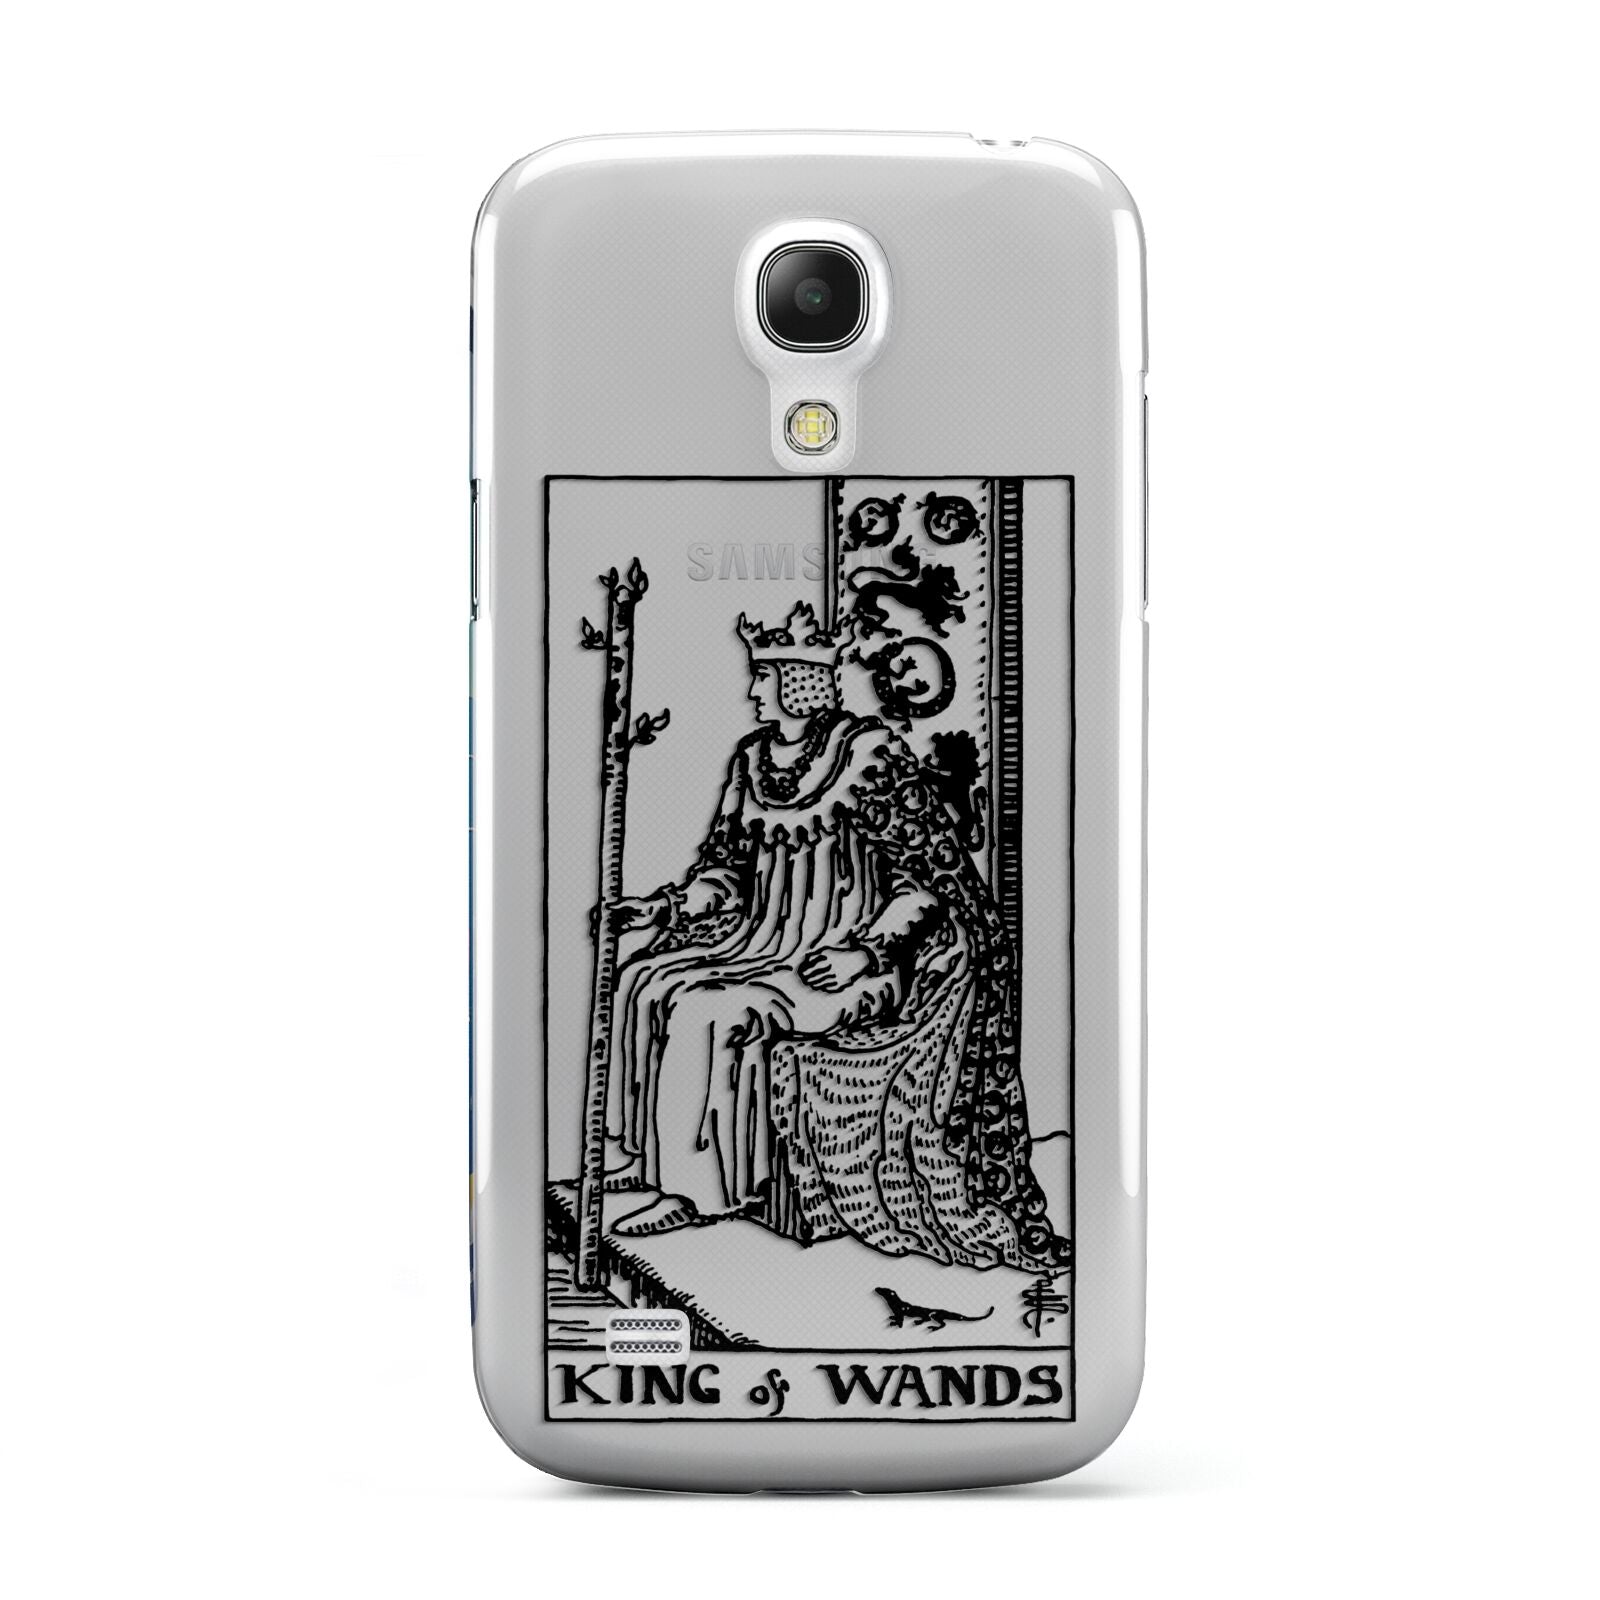 King of Wands Monochrome Samsung Galaxy S4 Mini Case